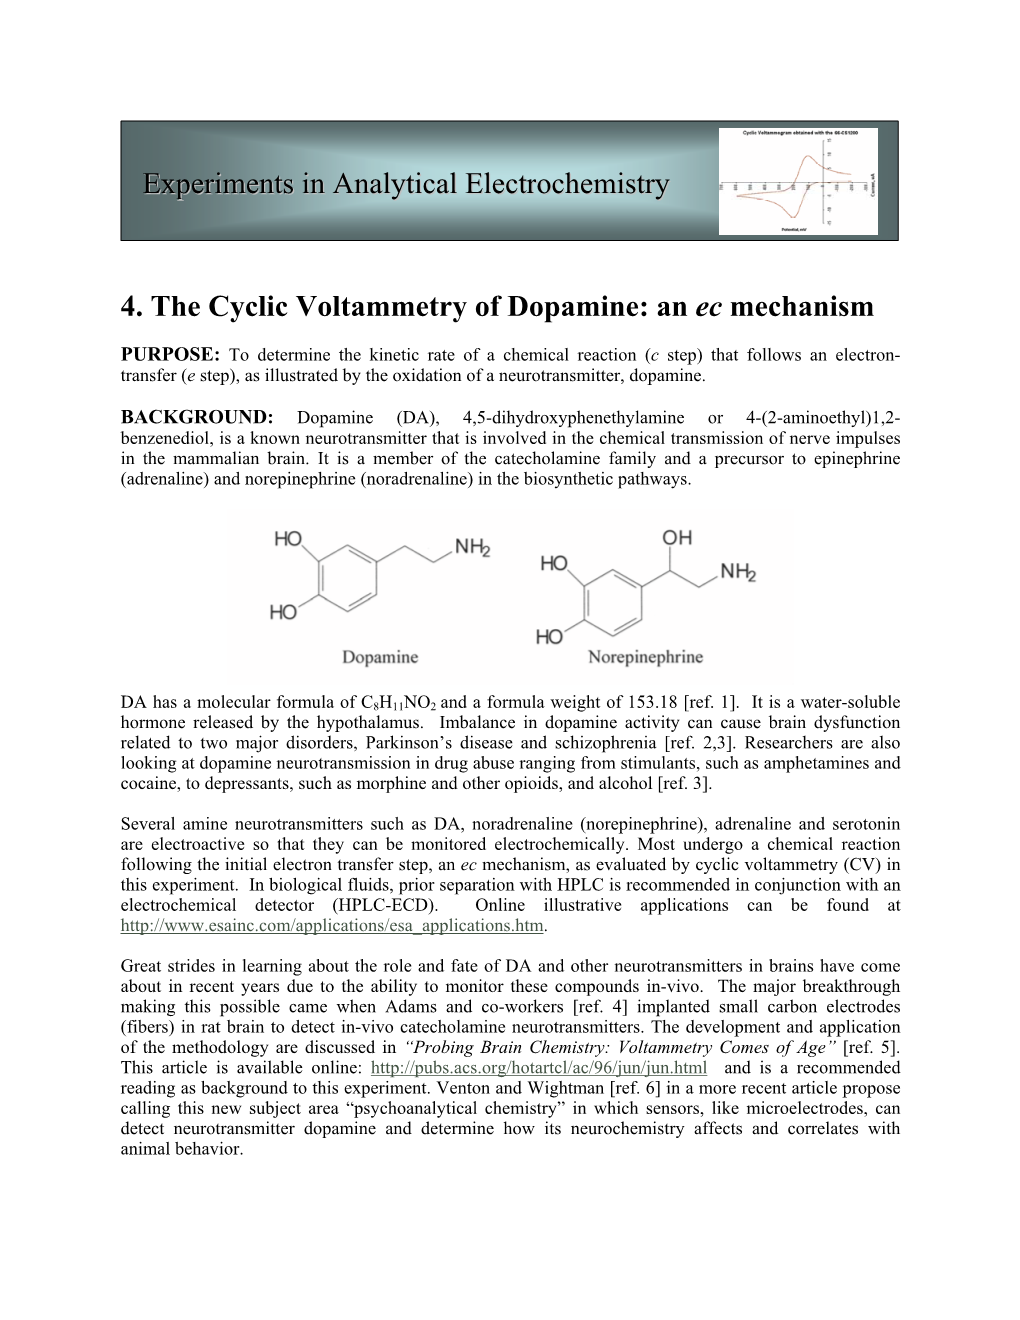 Cyclic Voltammetry of Dopamine: an Ec Mechanism